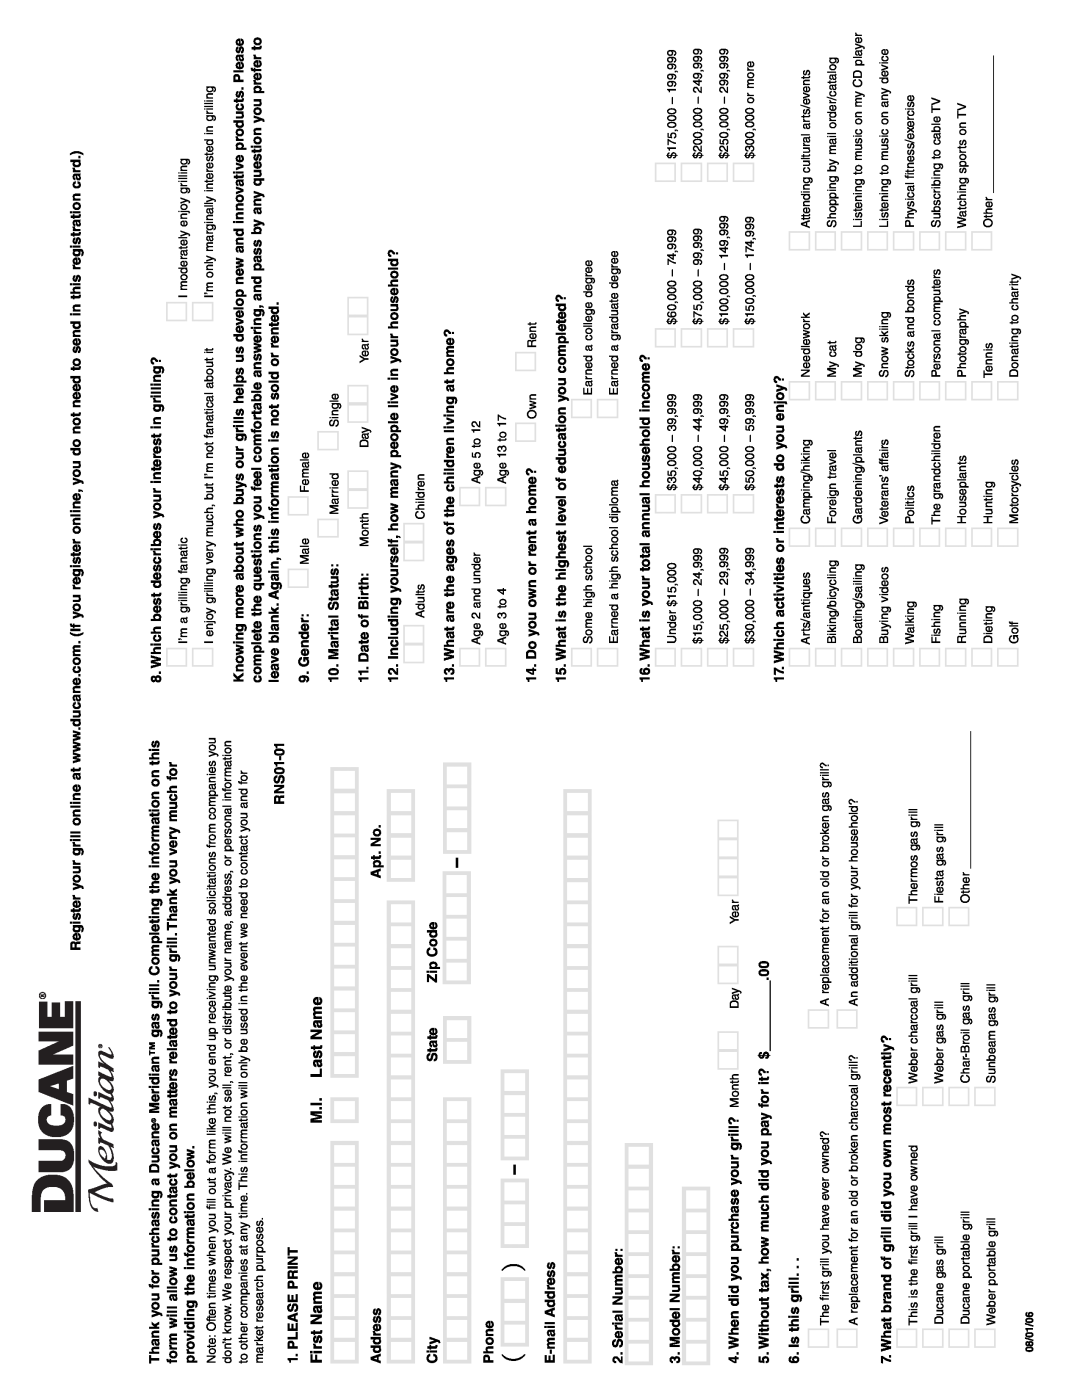 Ducane 2020805 owner manual RNS01-01, Please Print, Address, Apt. No, City, State, Zip Code, Phone, Gender, Marital Status 